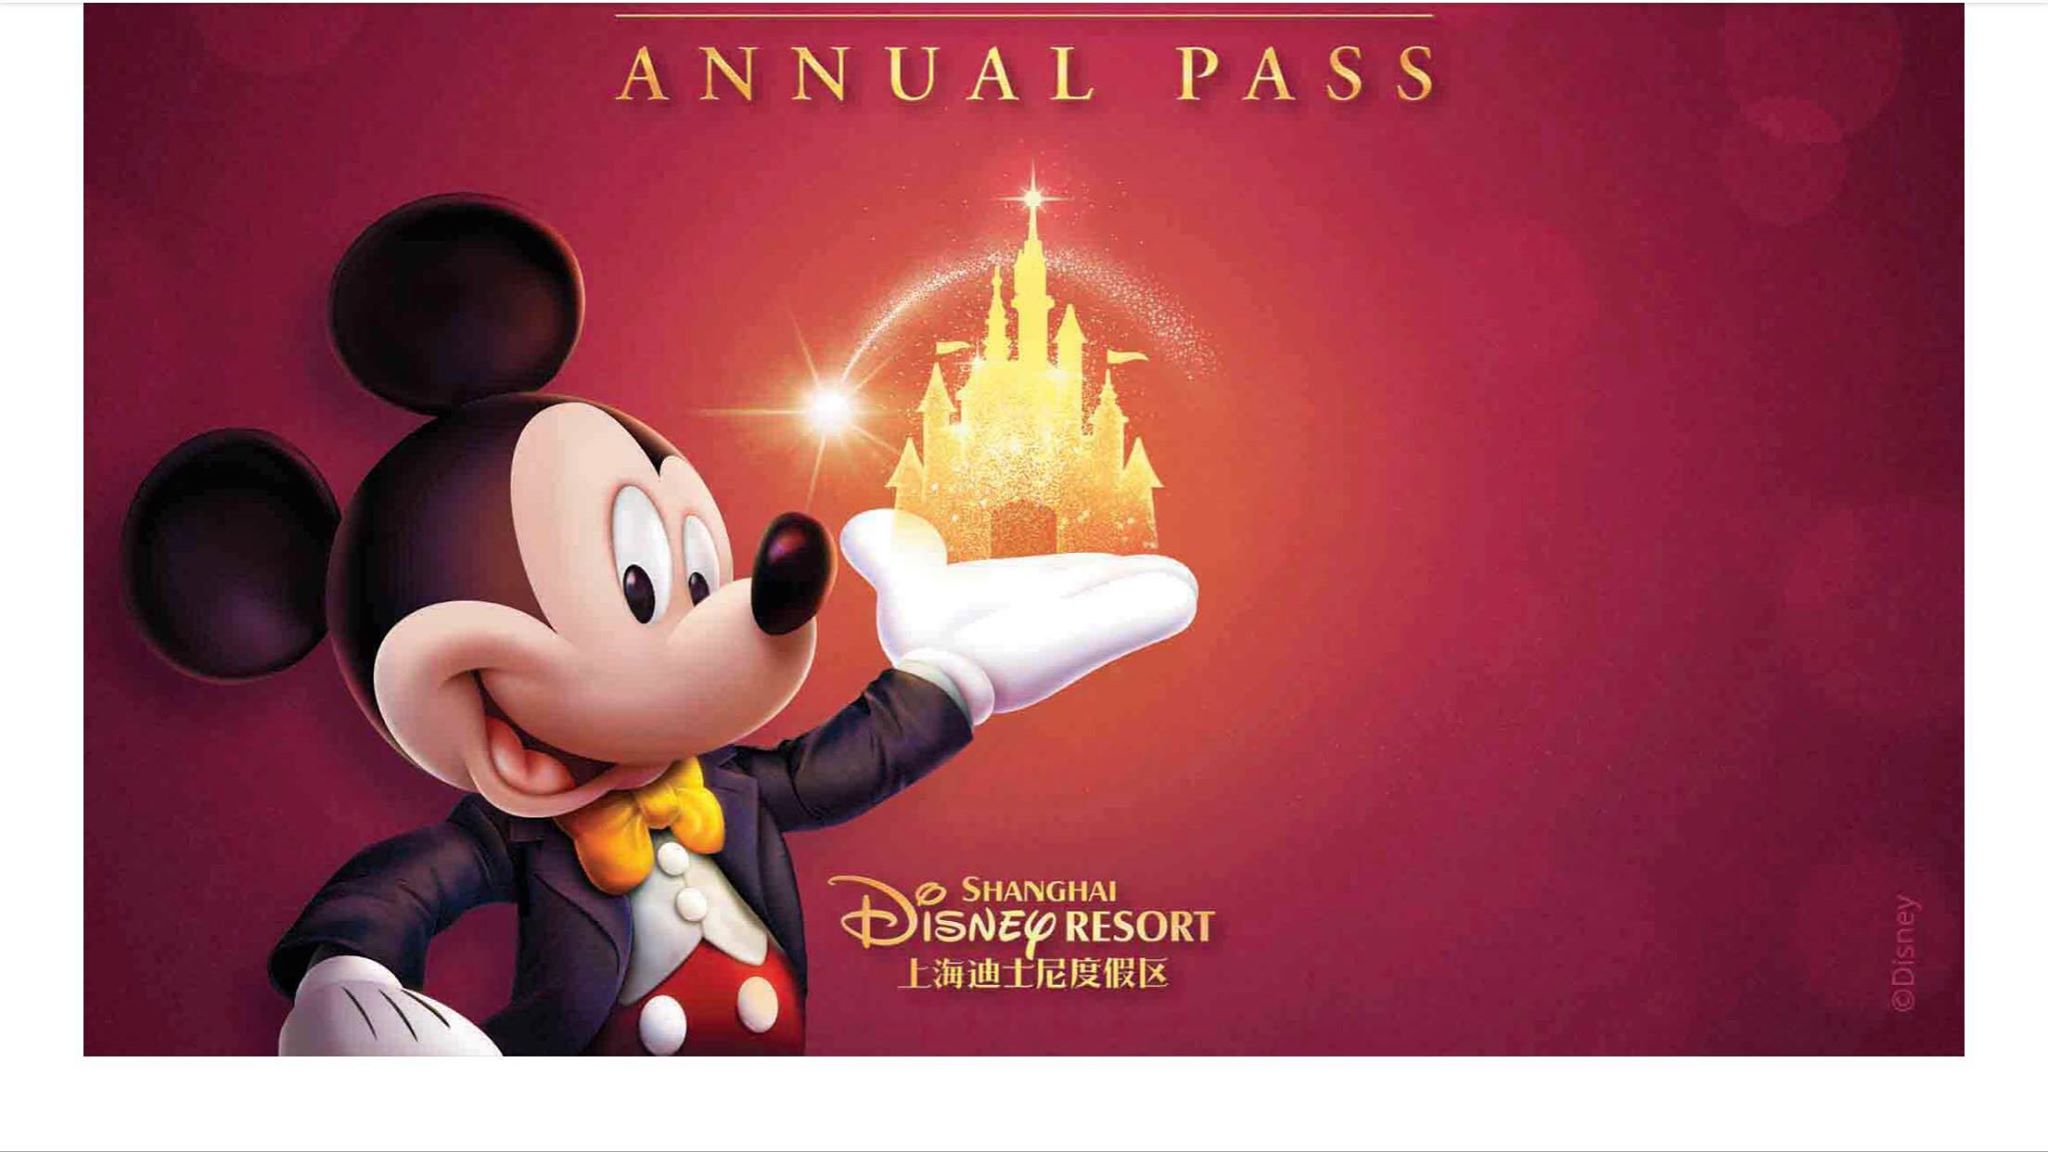 New Annual Pass Launches at Shanghai Disney Resort